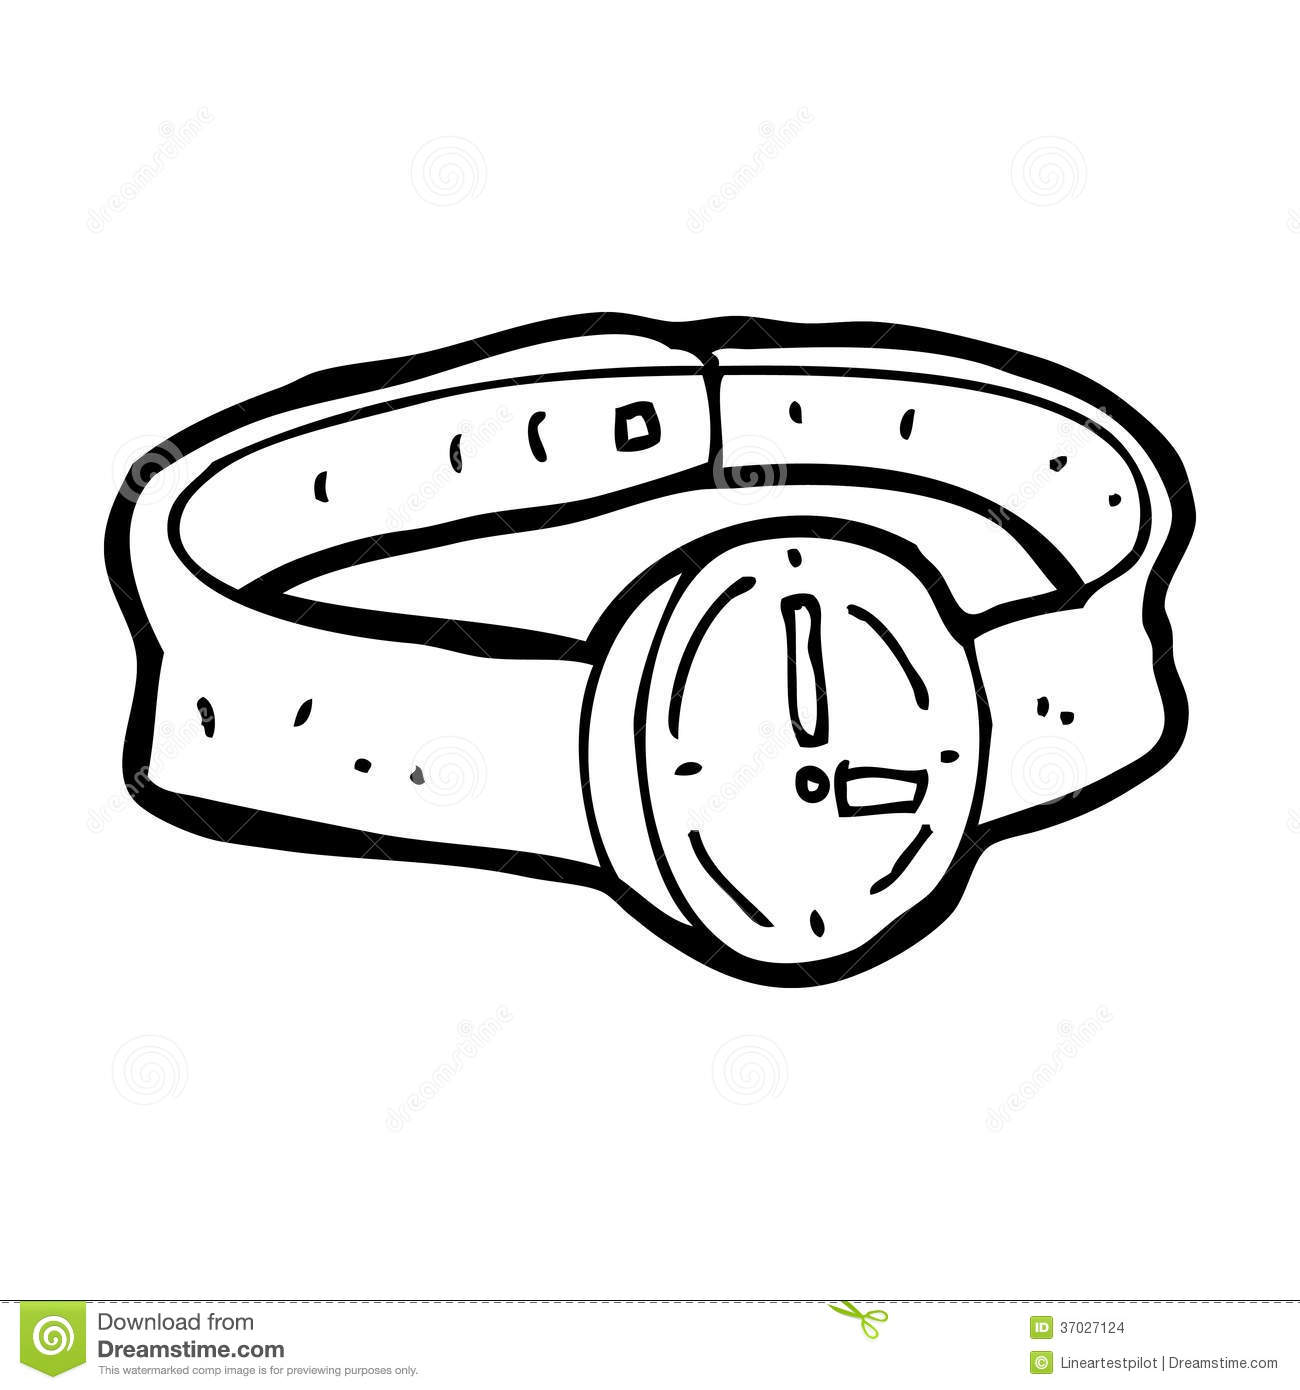 Cartoon Wrist Watch Stock Images   Image  37027124